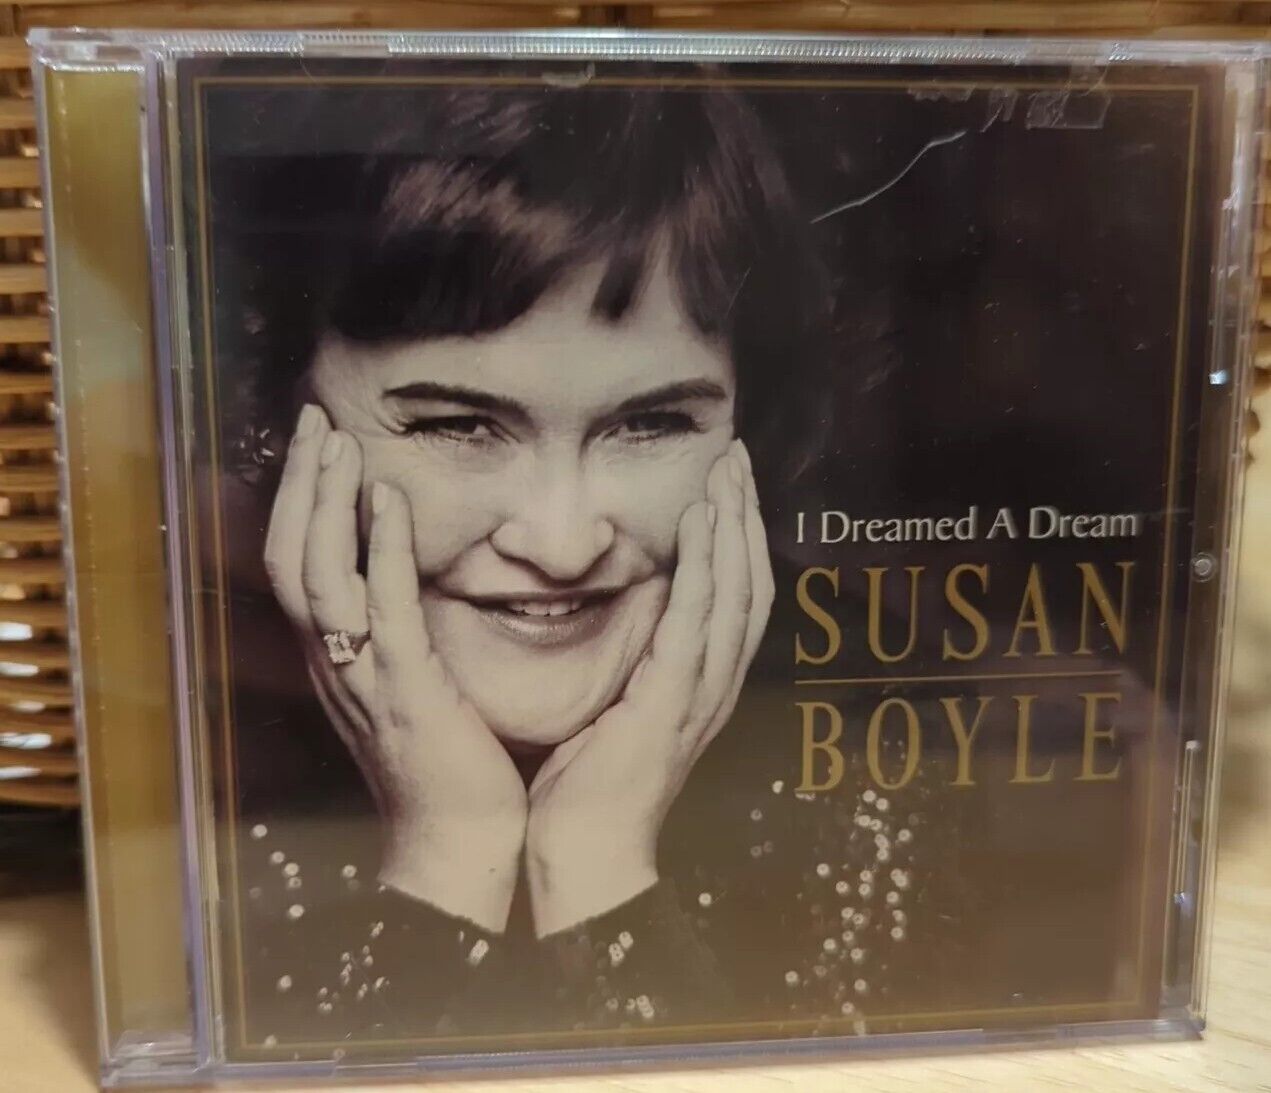 I Dreamed A Dream by Susan Boyle (CD, 2009) - Britain's Got Talent